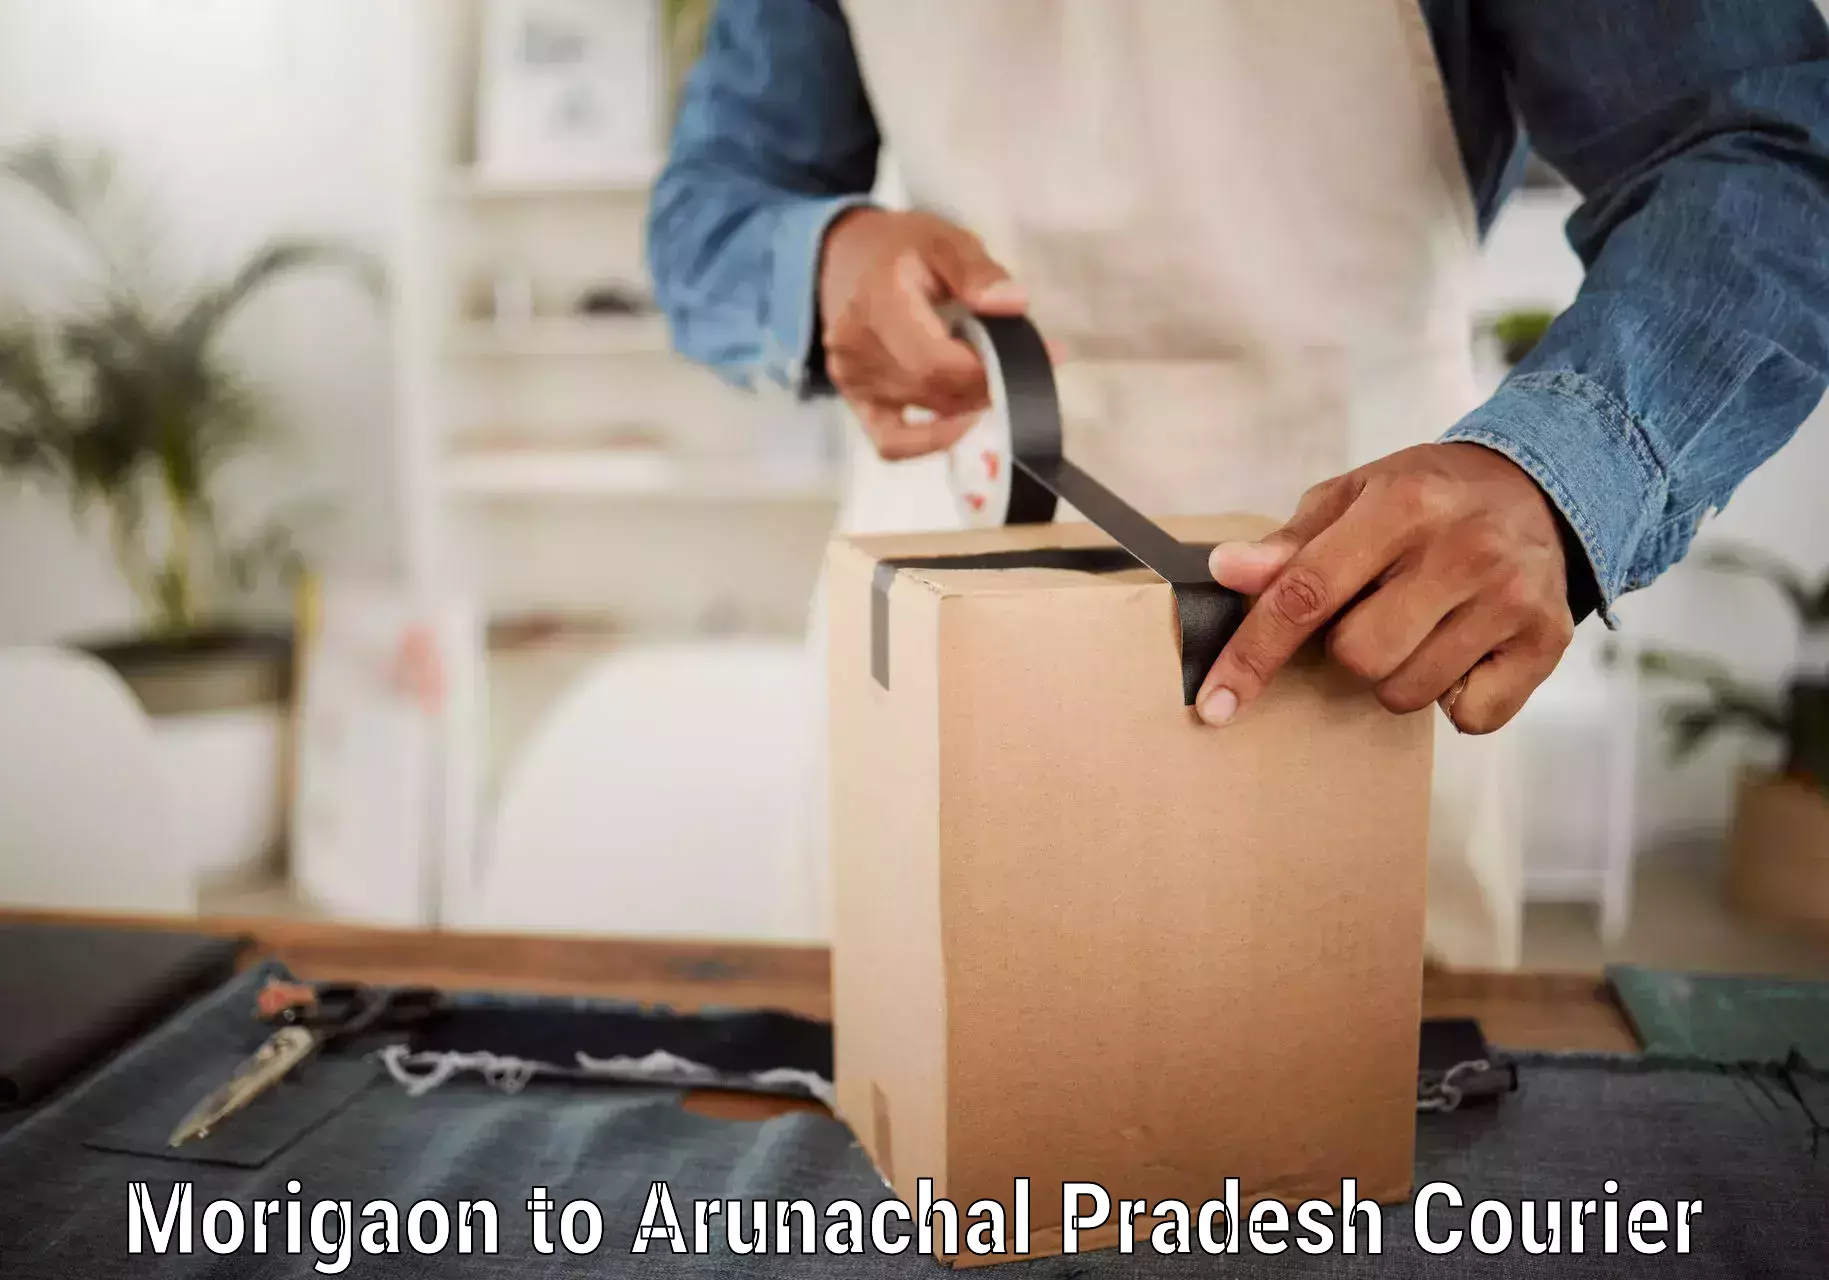 Courier service comparison Morigaon to Arunachal Pradesh